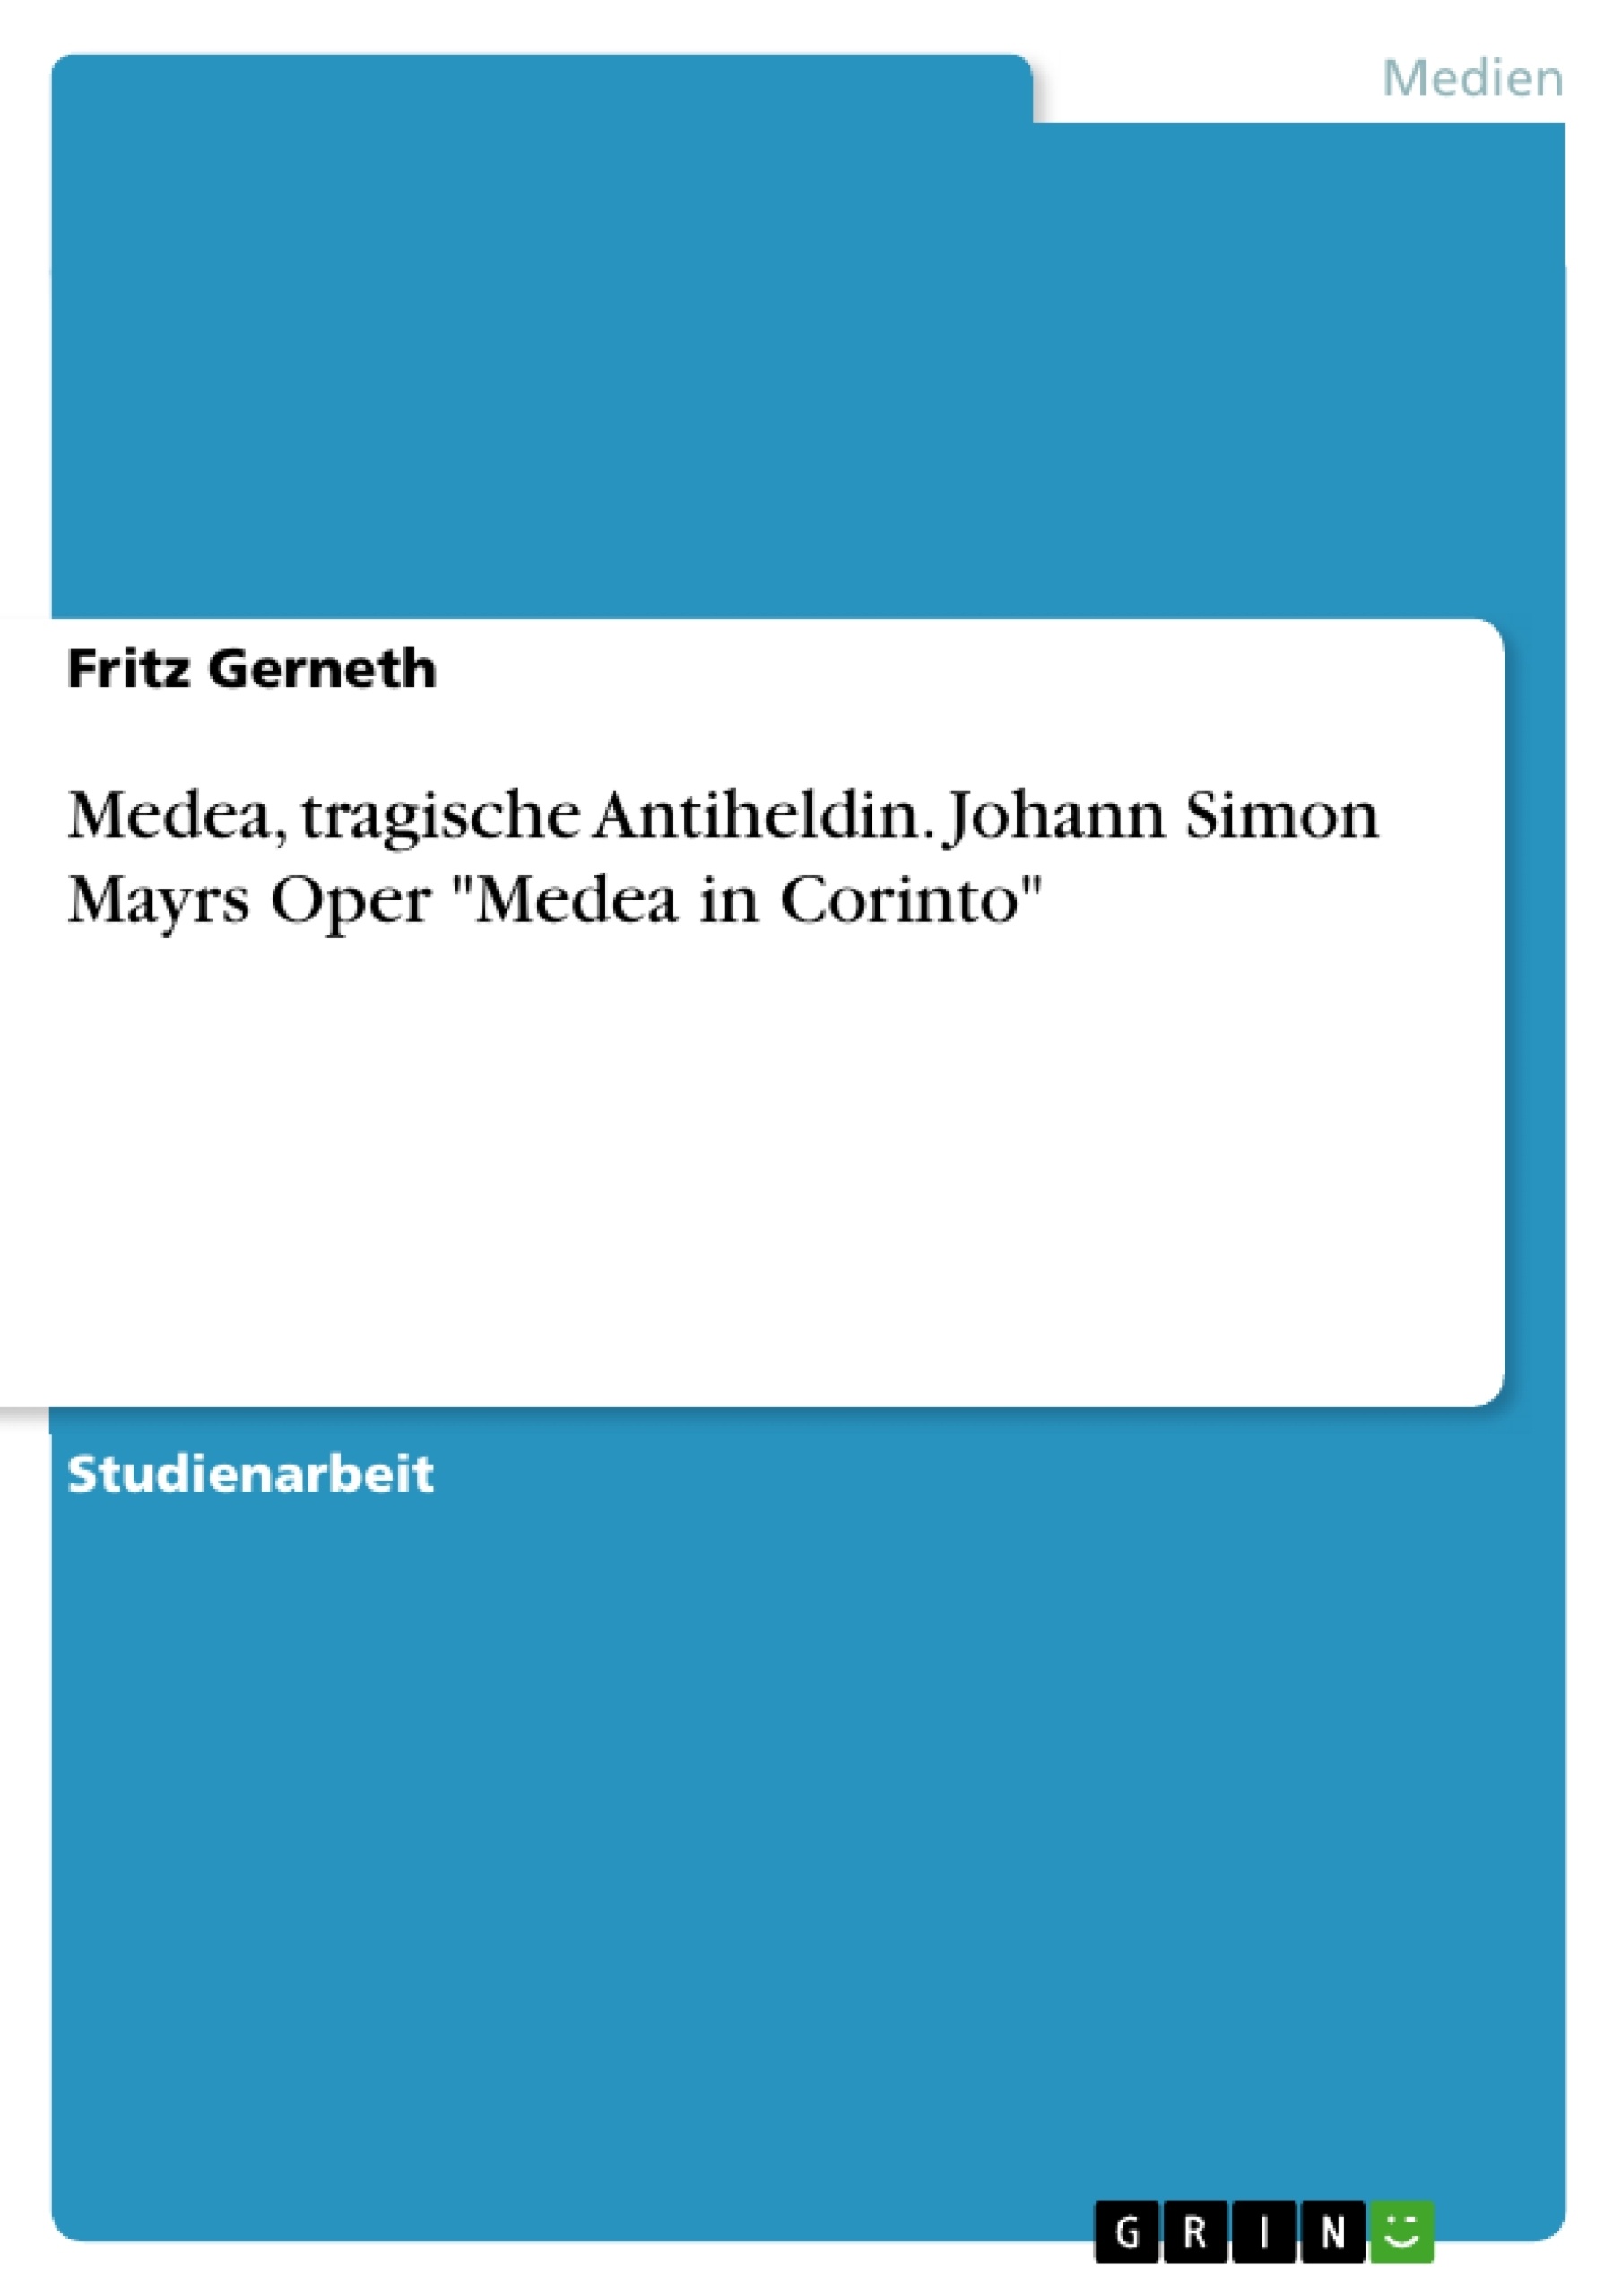 Titel: Medea, tragische Antiheldin. Johann Simon Mayrs Oper "Medea in Corinto"